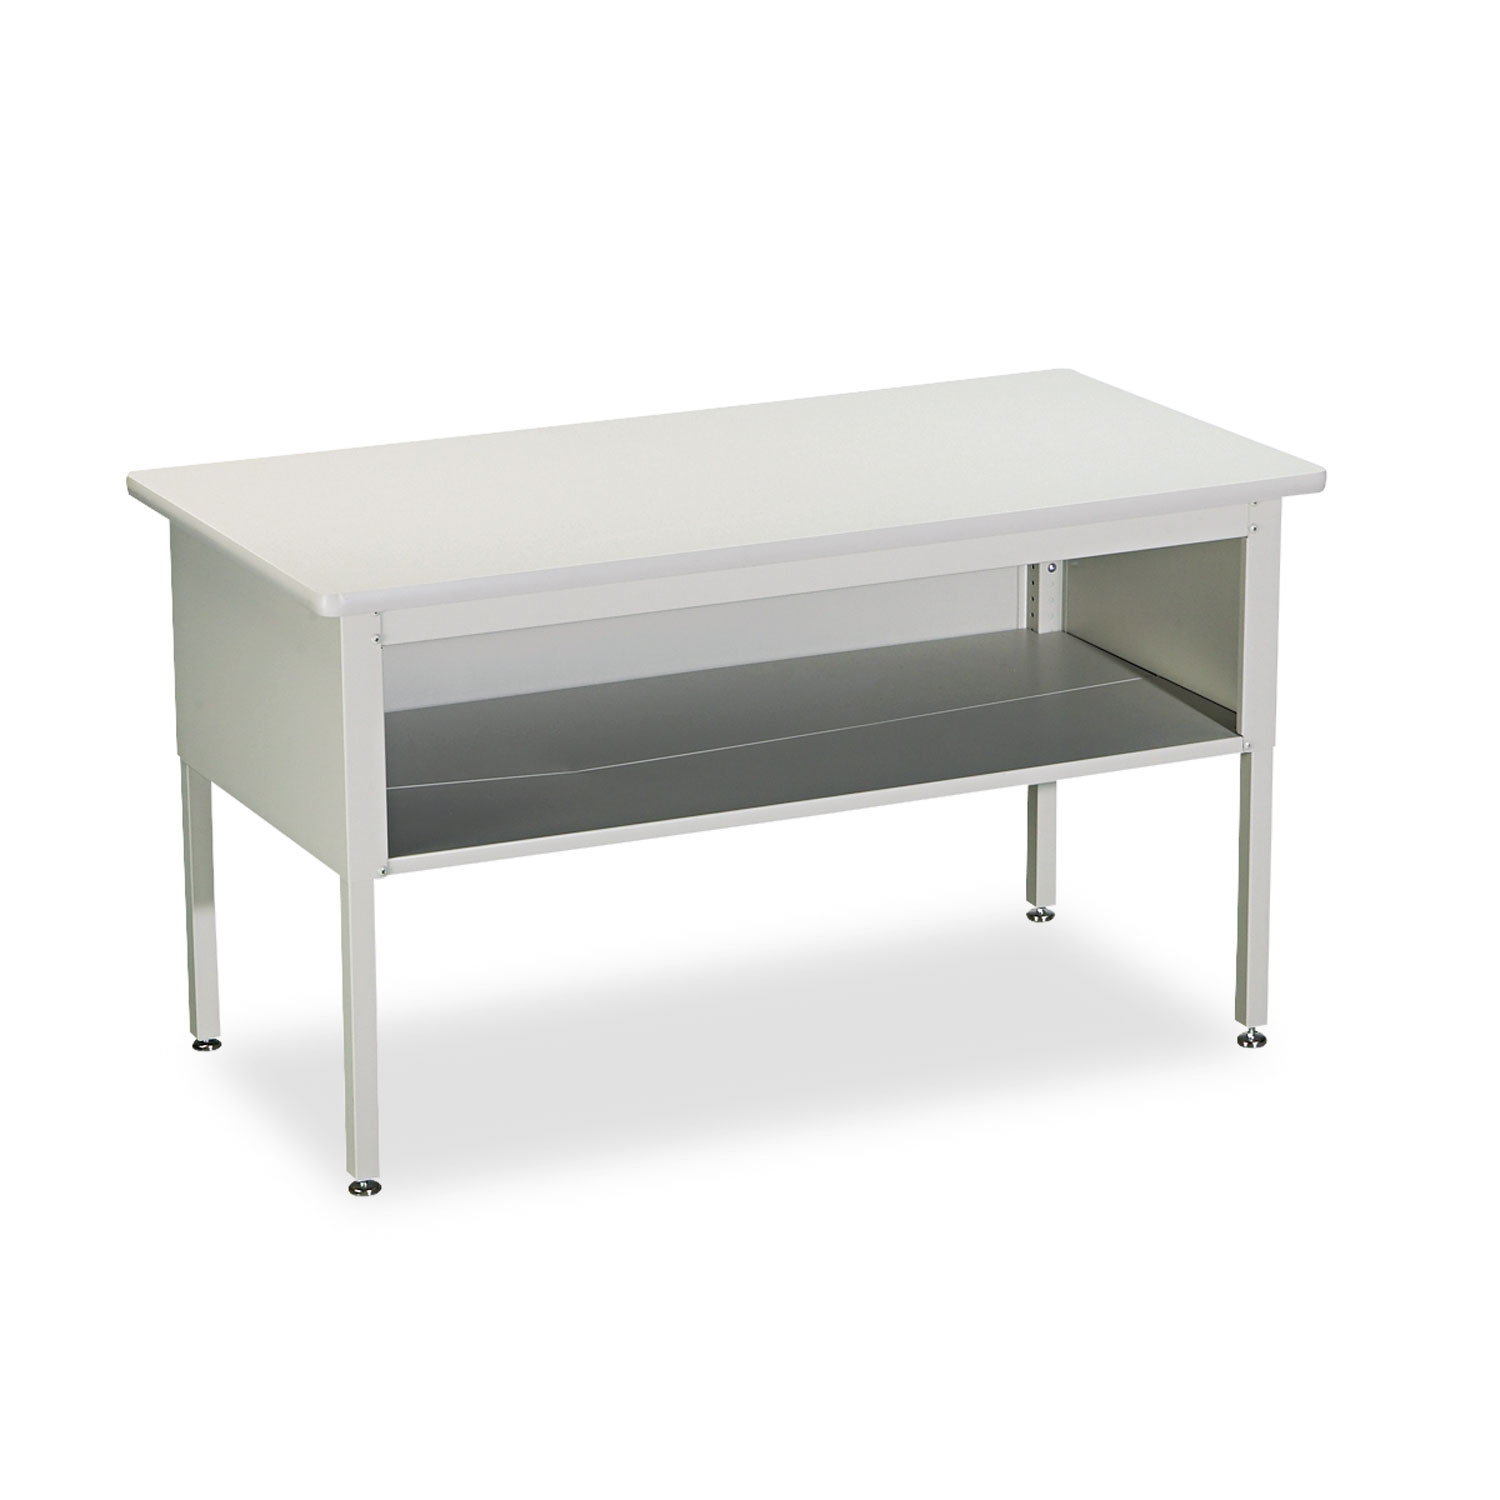 E-Z Sort Sorting Table Top, Rectangular, 60w x 30d, Gray